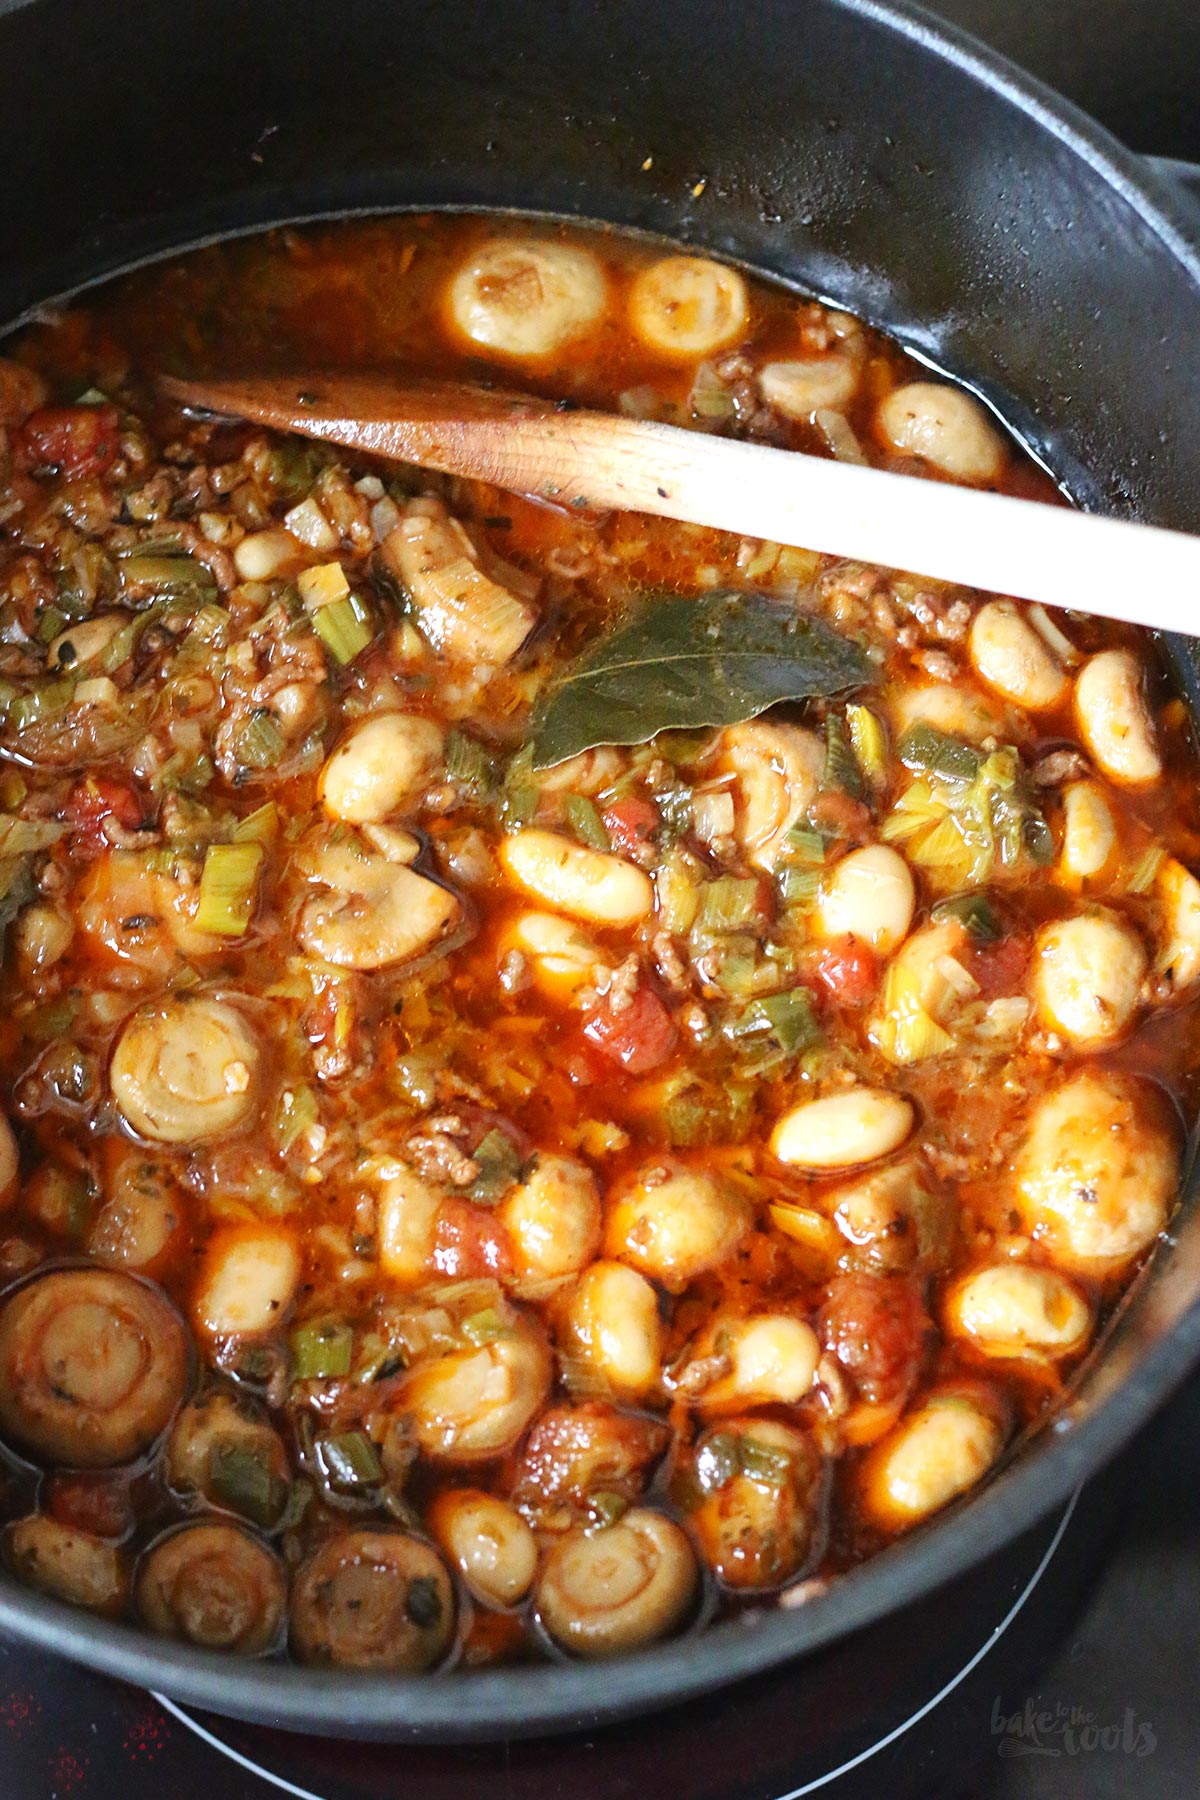 Braised Mushroom, White Beans & Leek Stew | Bake to the roots